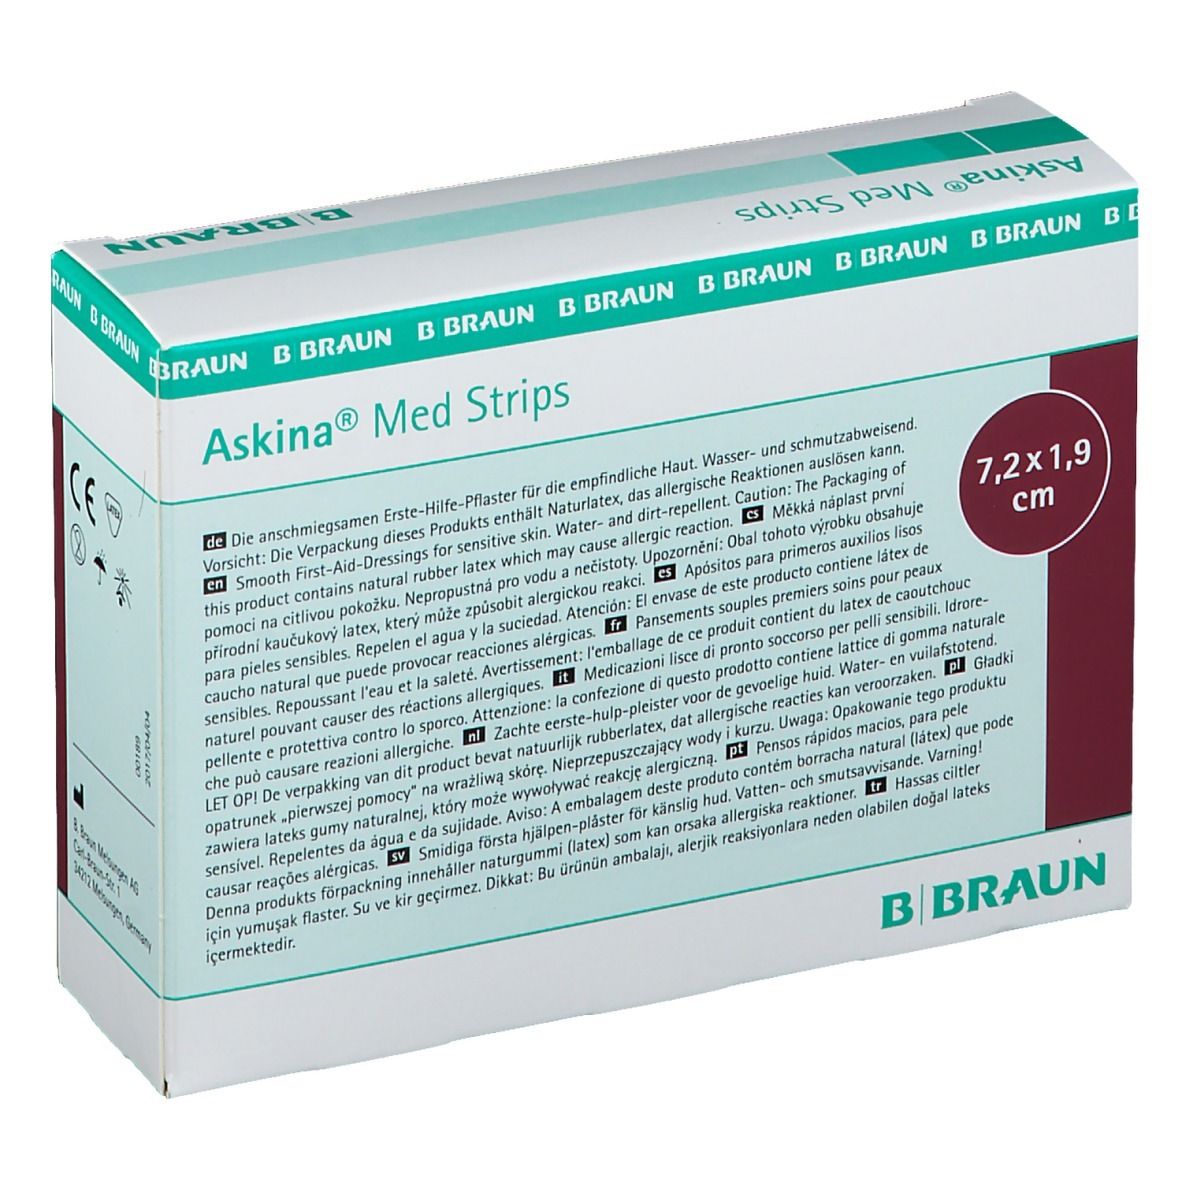 Askina® Med Strips 1,9 x 7,2 cm